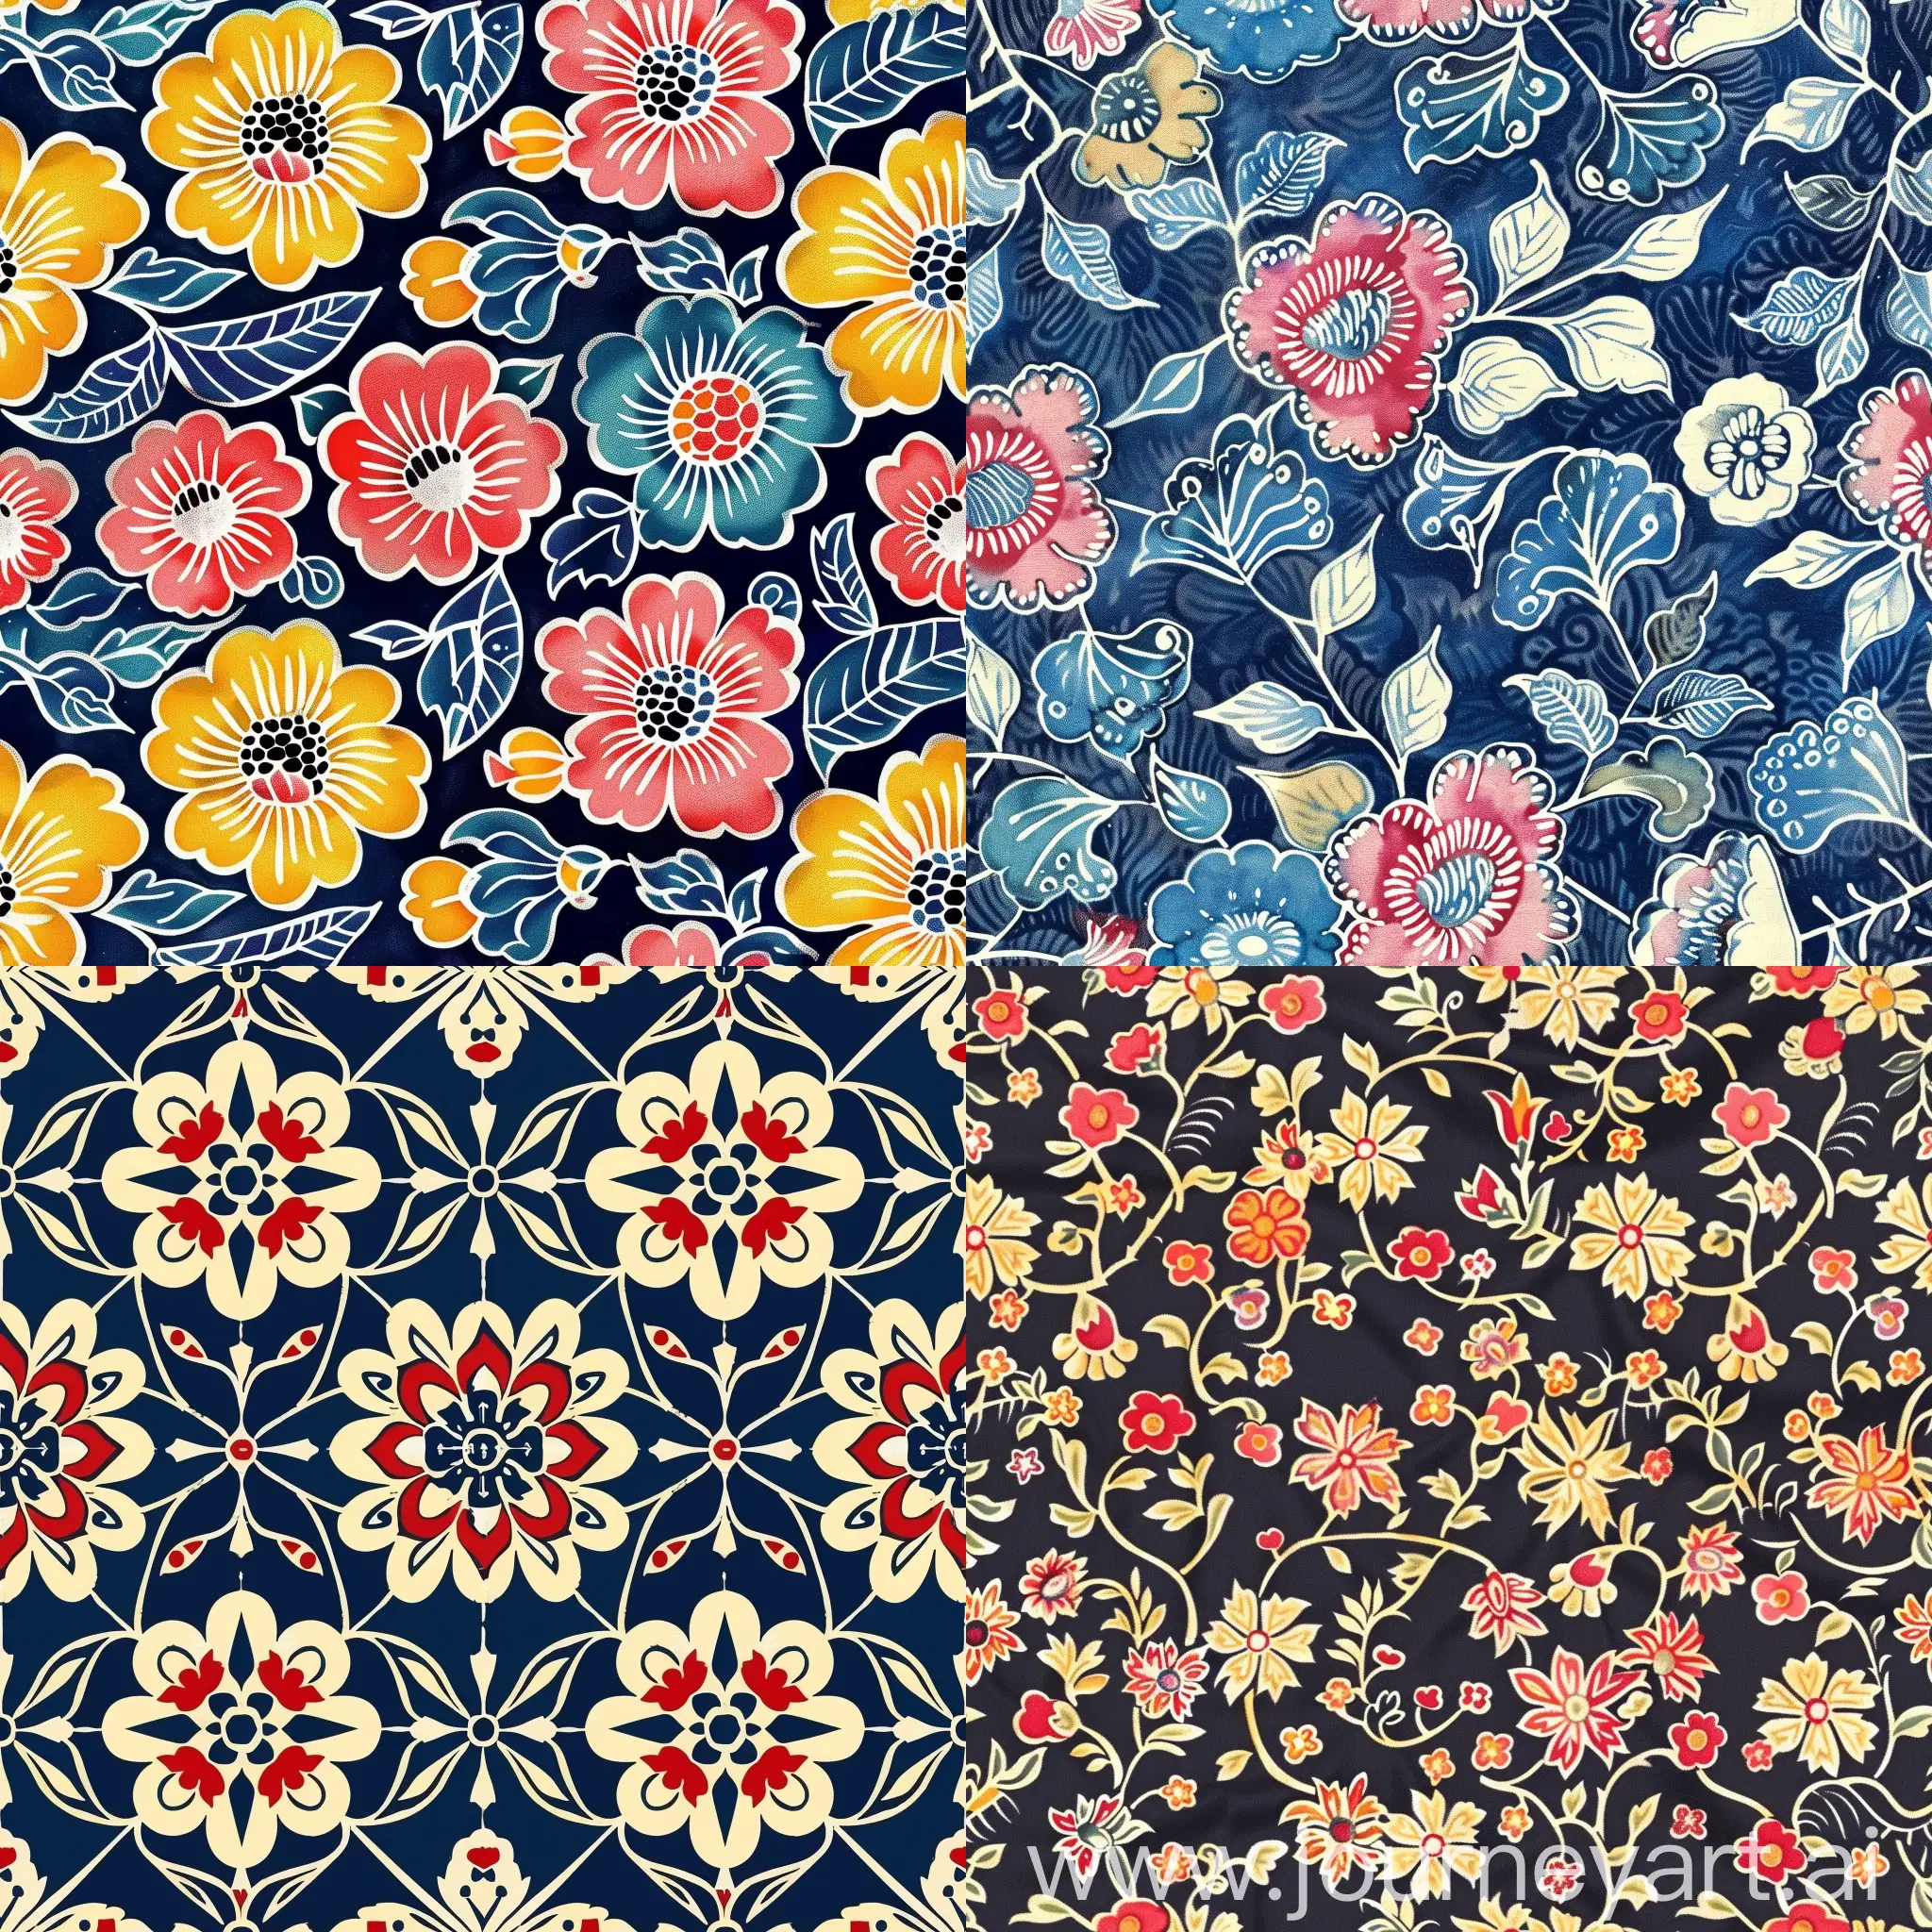 Exquisite-Batik-Flower-Tile-Pattern-Design